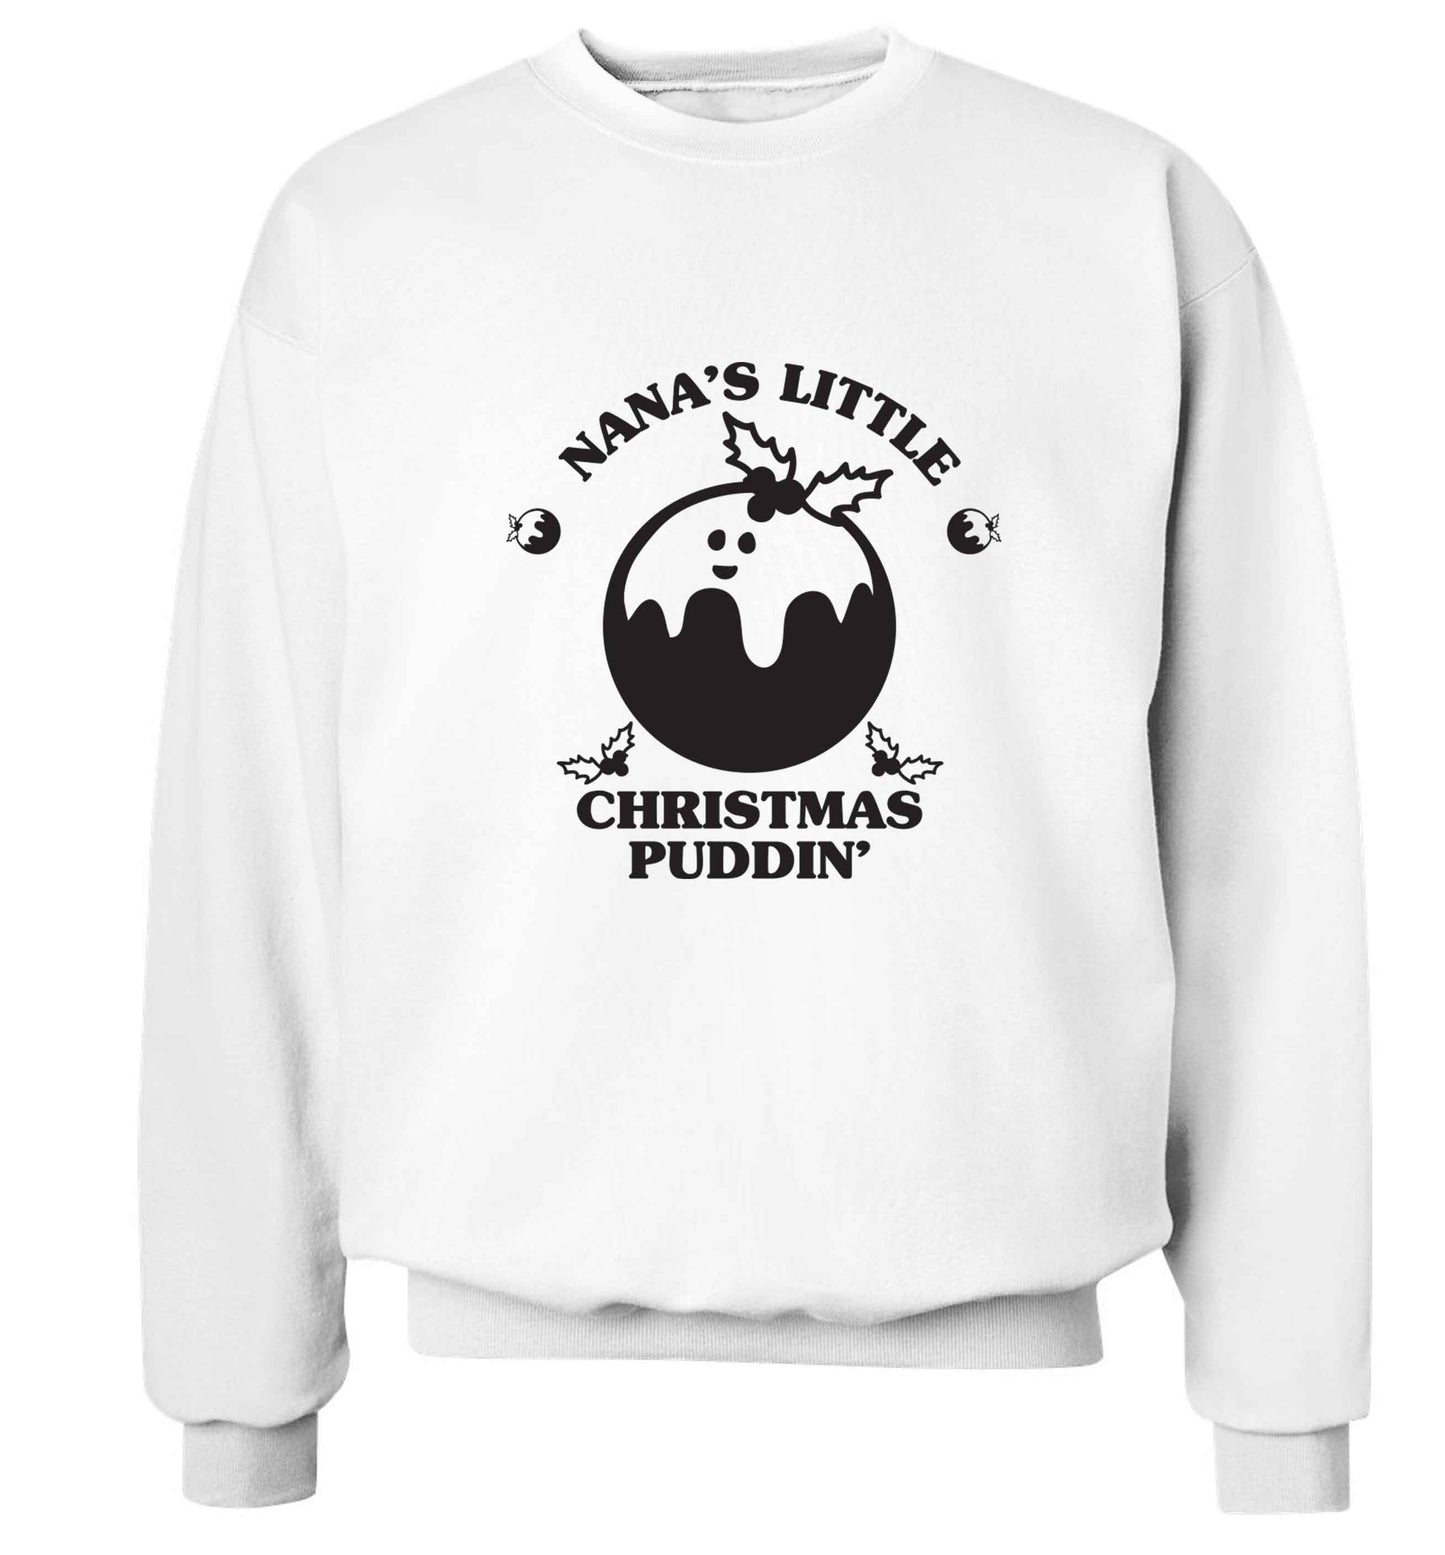 Nana's little Christmas puddin' Adult's unisex white Sweater 2XL